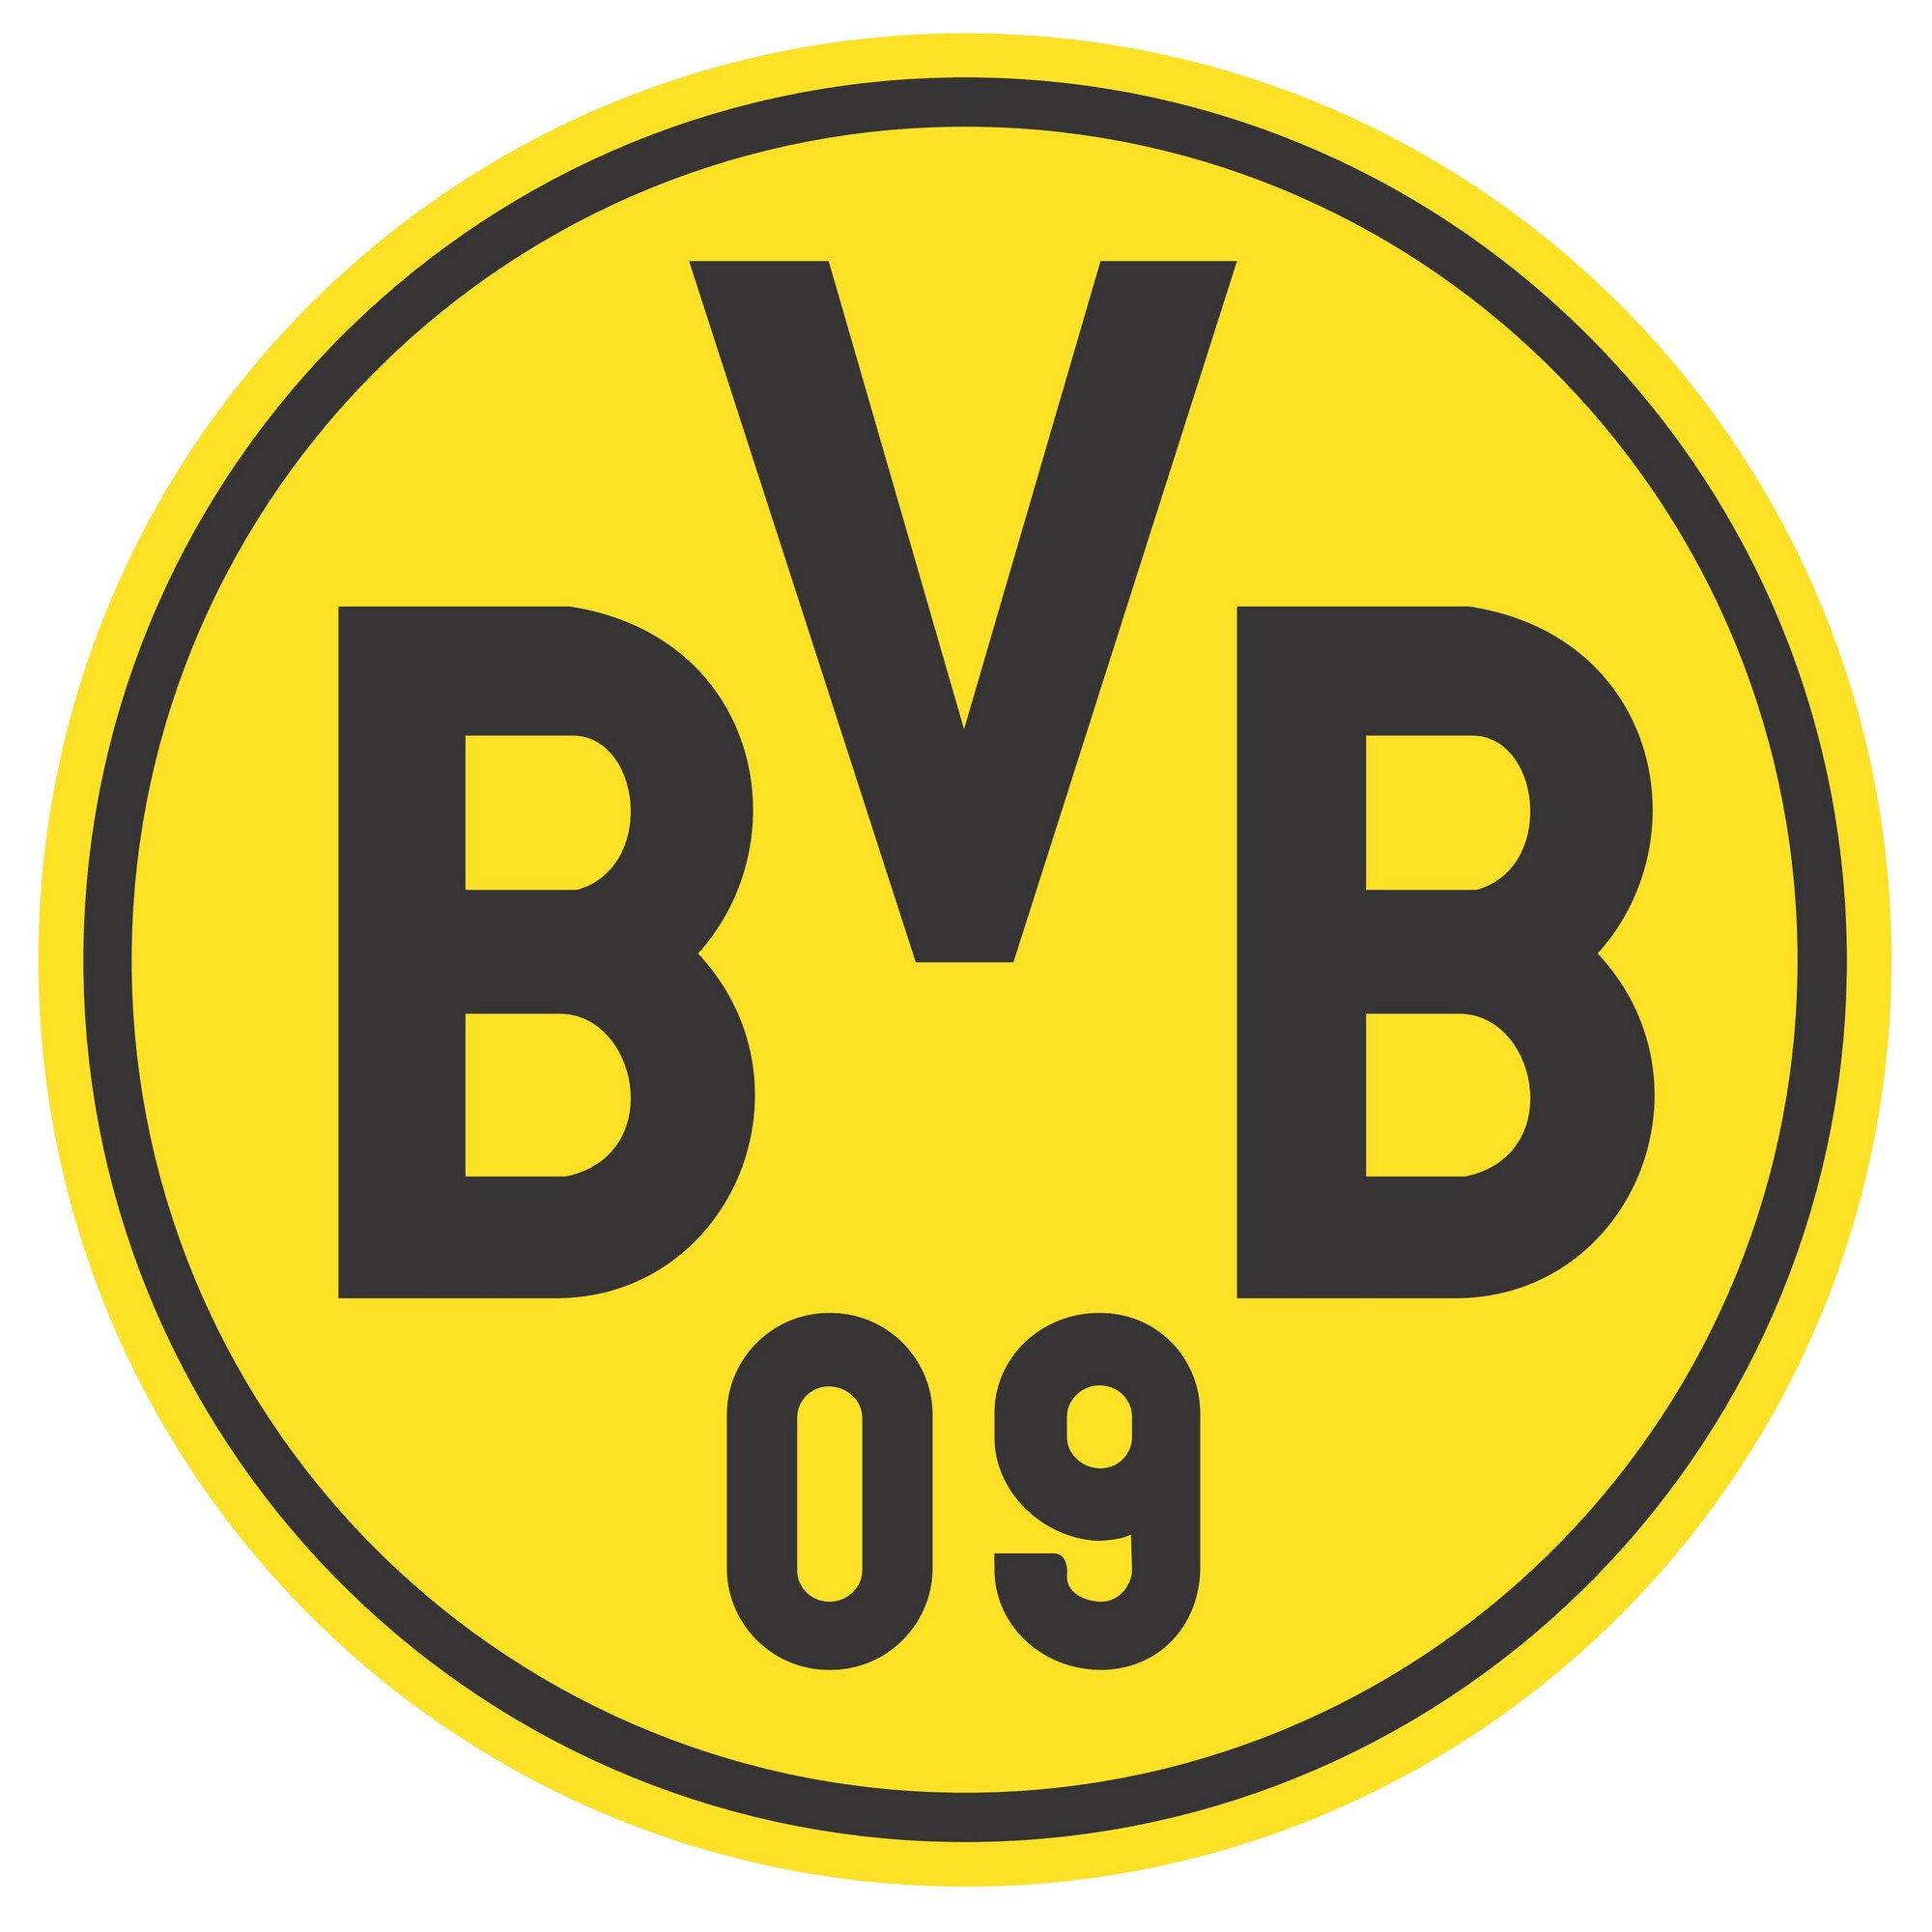 Bvb logo clipart - ClipartFox